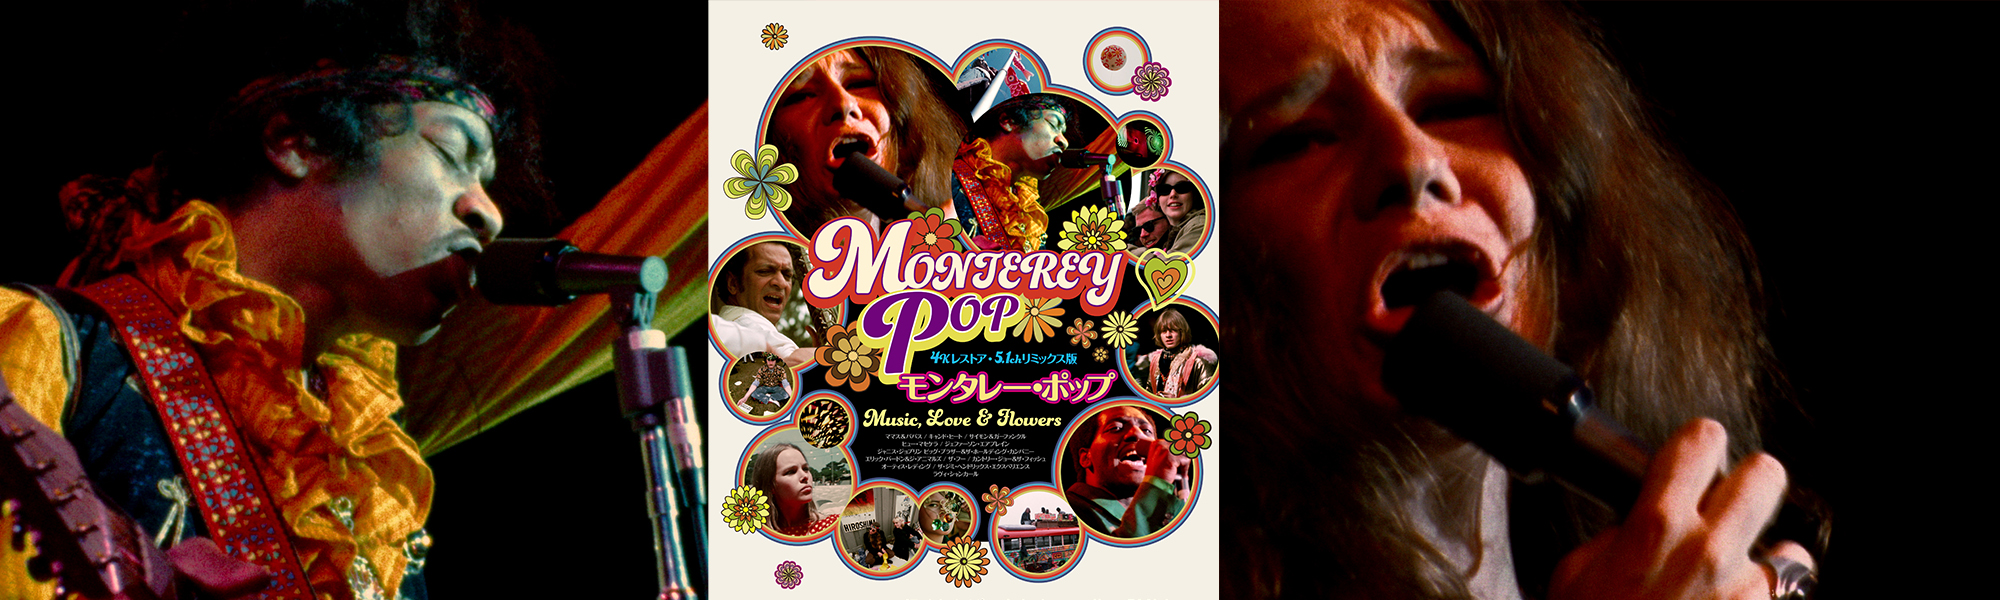 MONTEREY POP モンタレー・ポップ